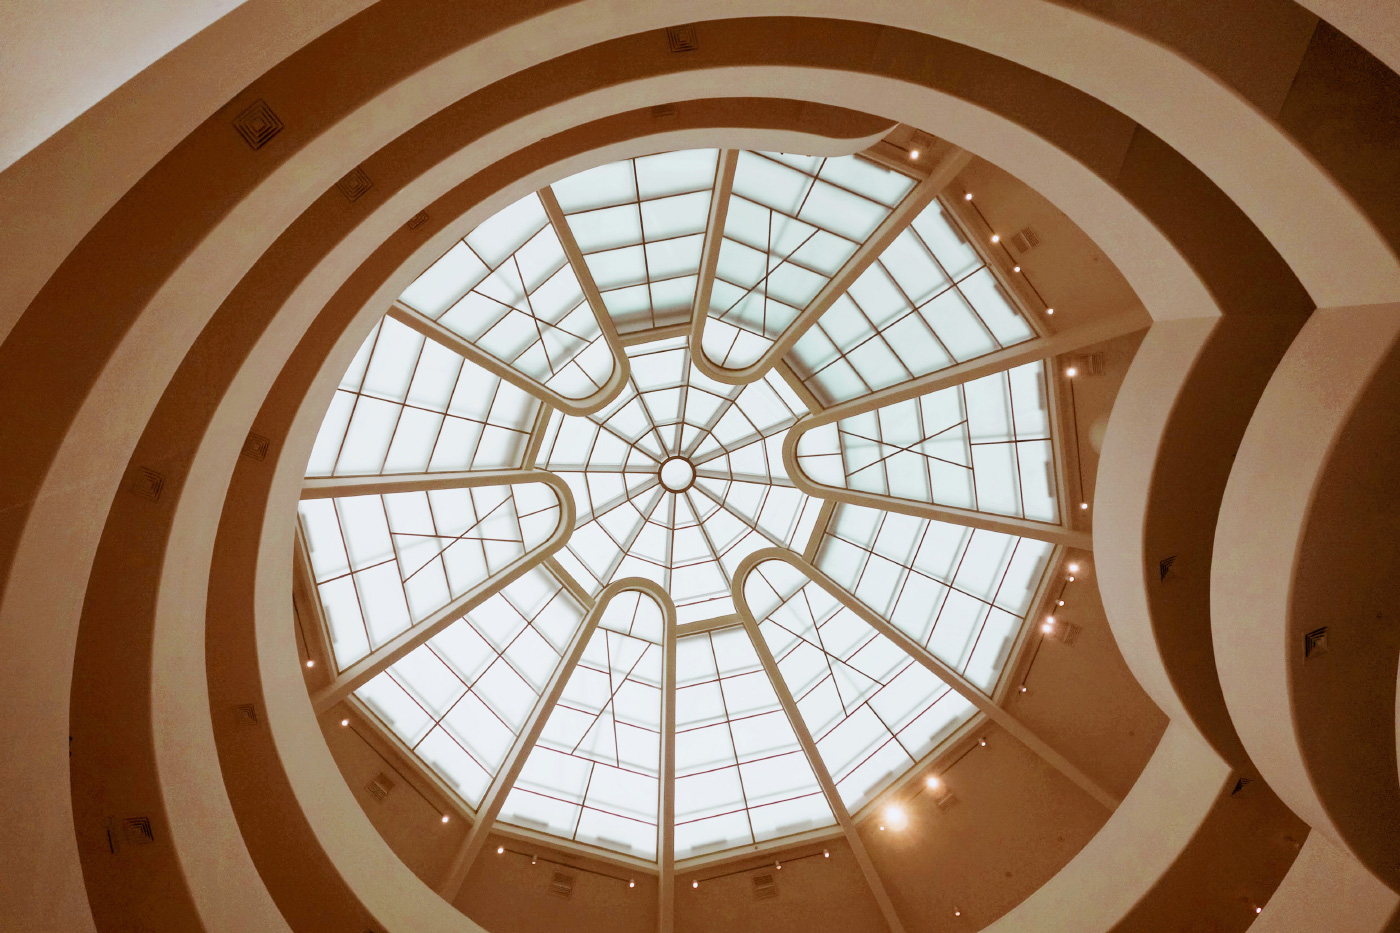 Photo looking upwards towards the Guggenheim New York's spiral skylight